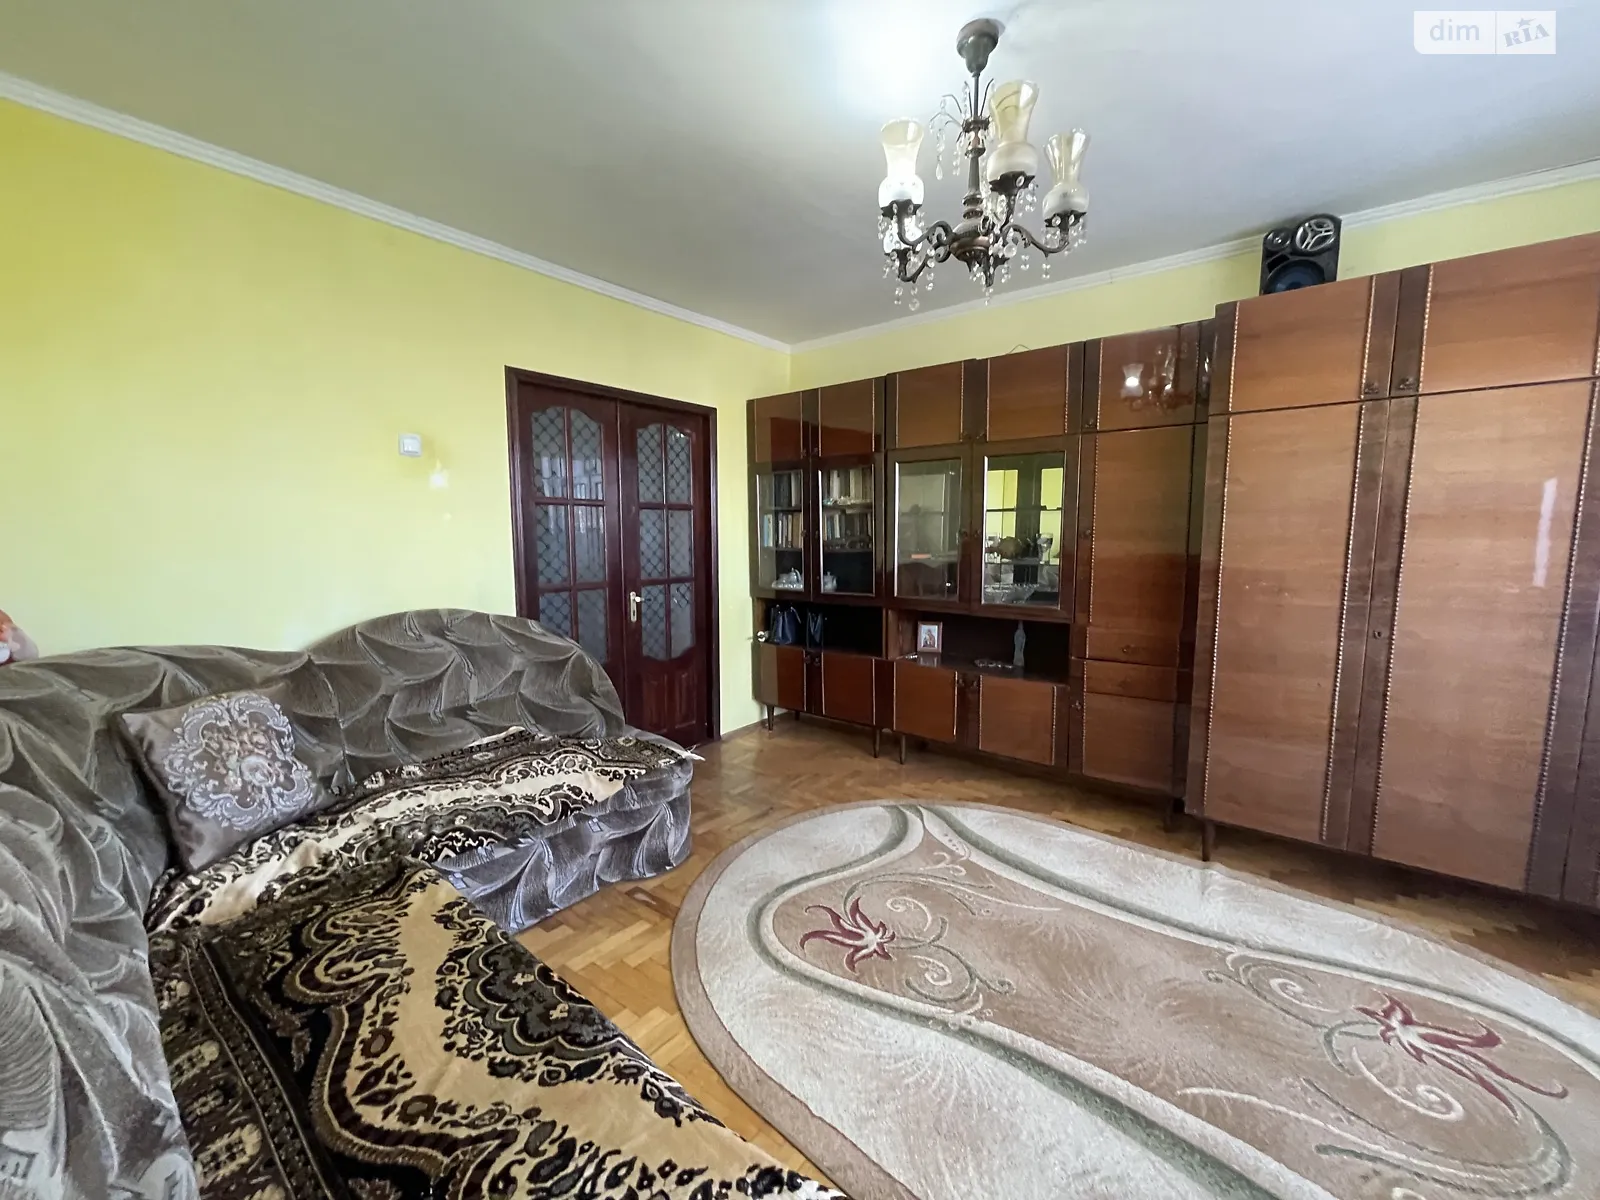 3-кімнатна квартира 64 кв. м у Тернополі, цена: 50000 $ - фото 1